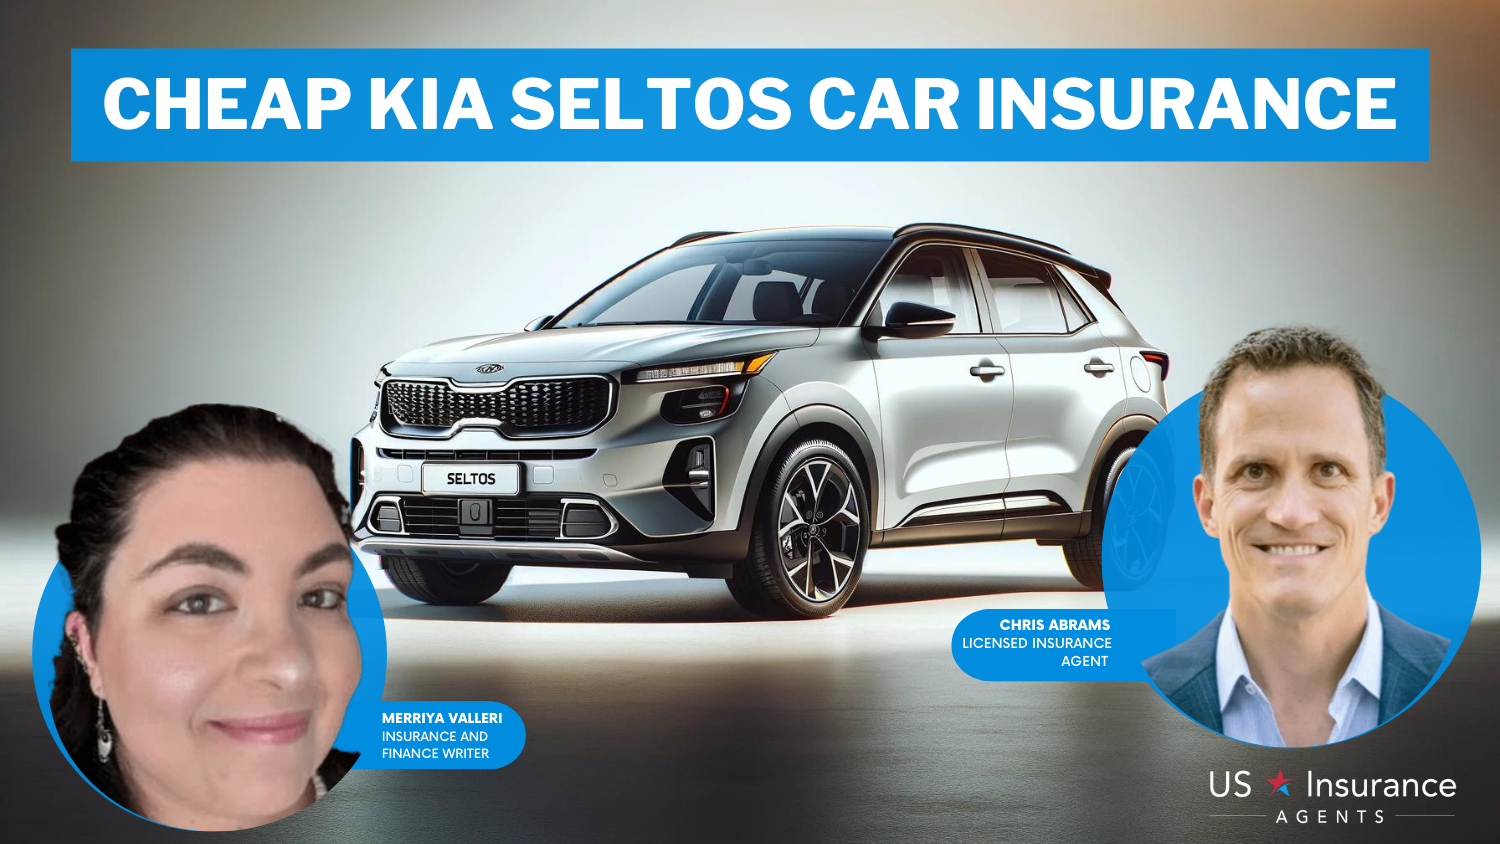 Cheap Kia Seltos Car Insurance: Nationwide, Safeco, and Progressive